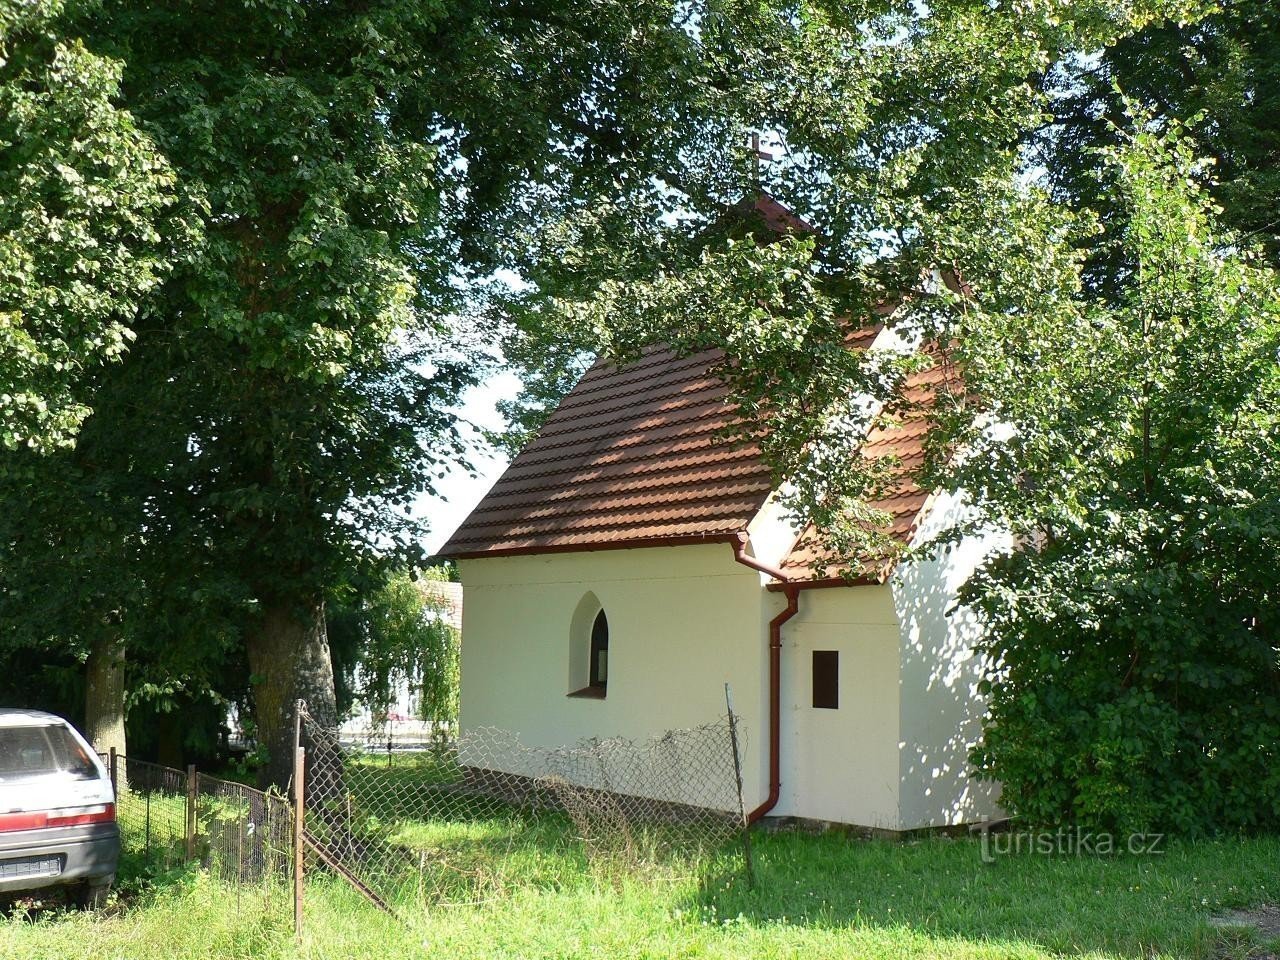 Střeziměř, chapelle sur le navsi